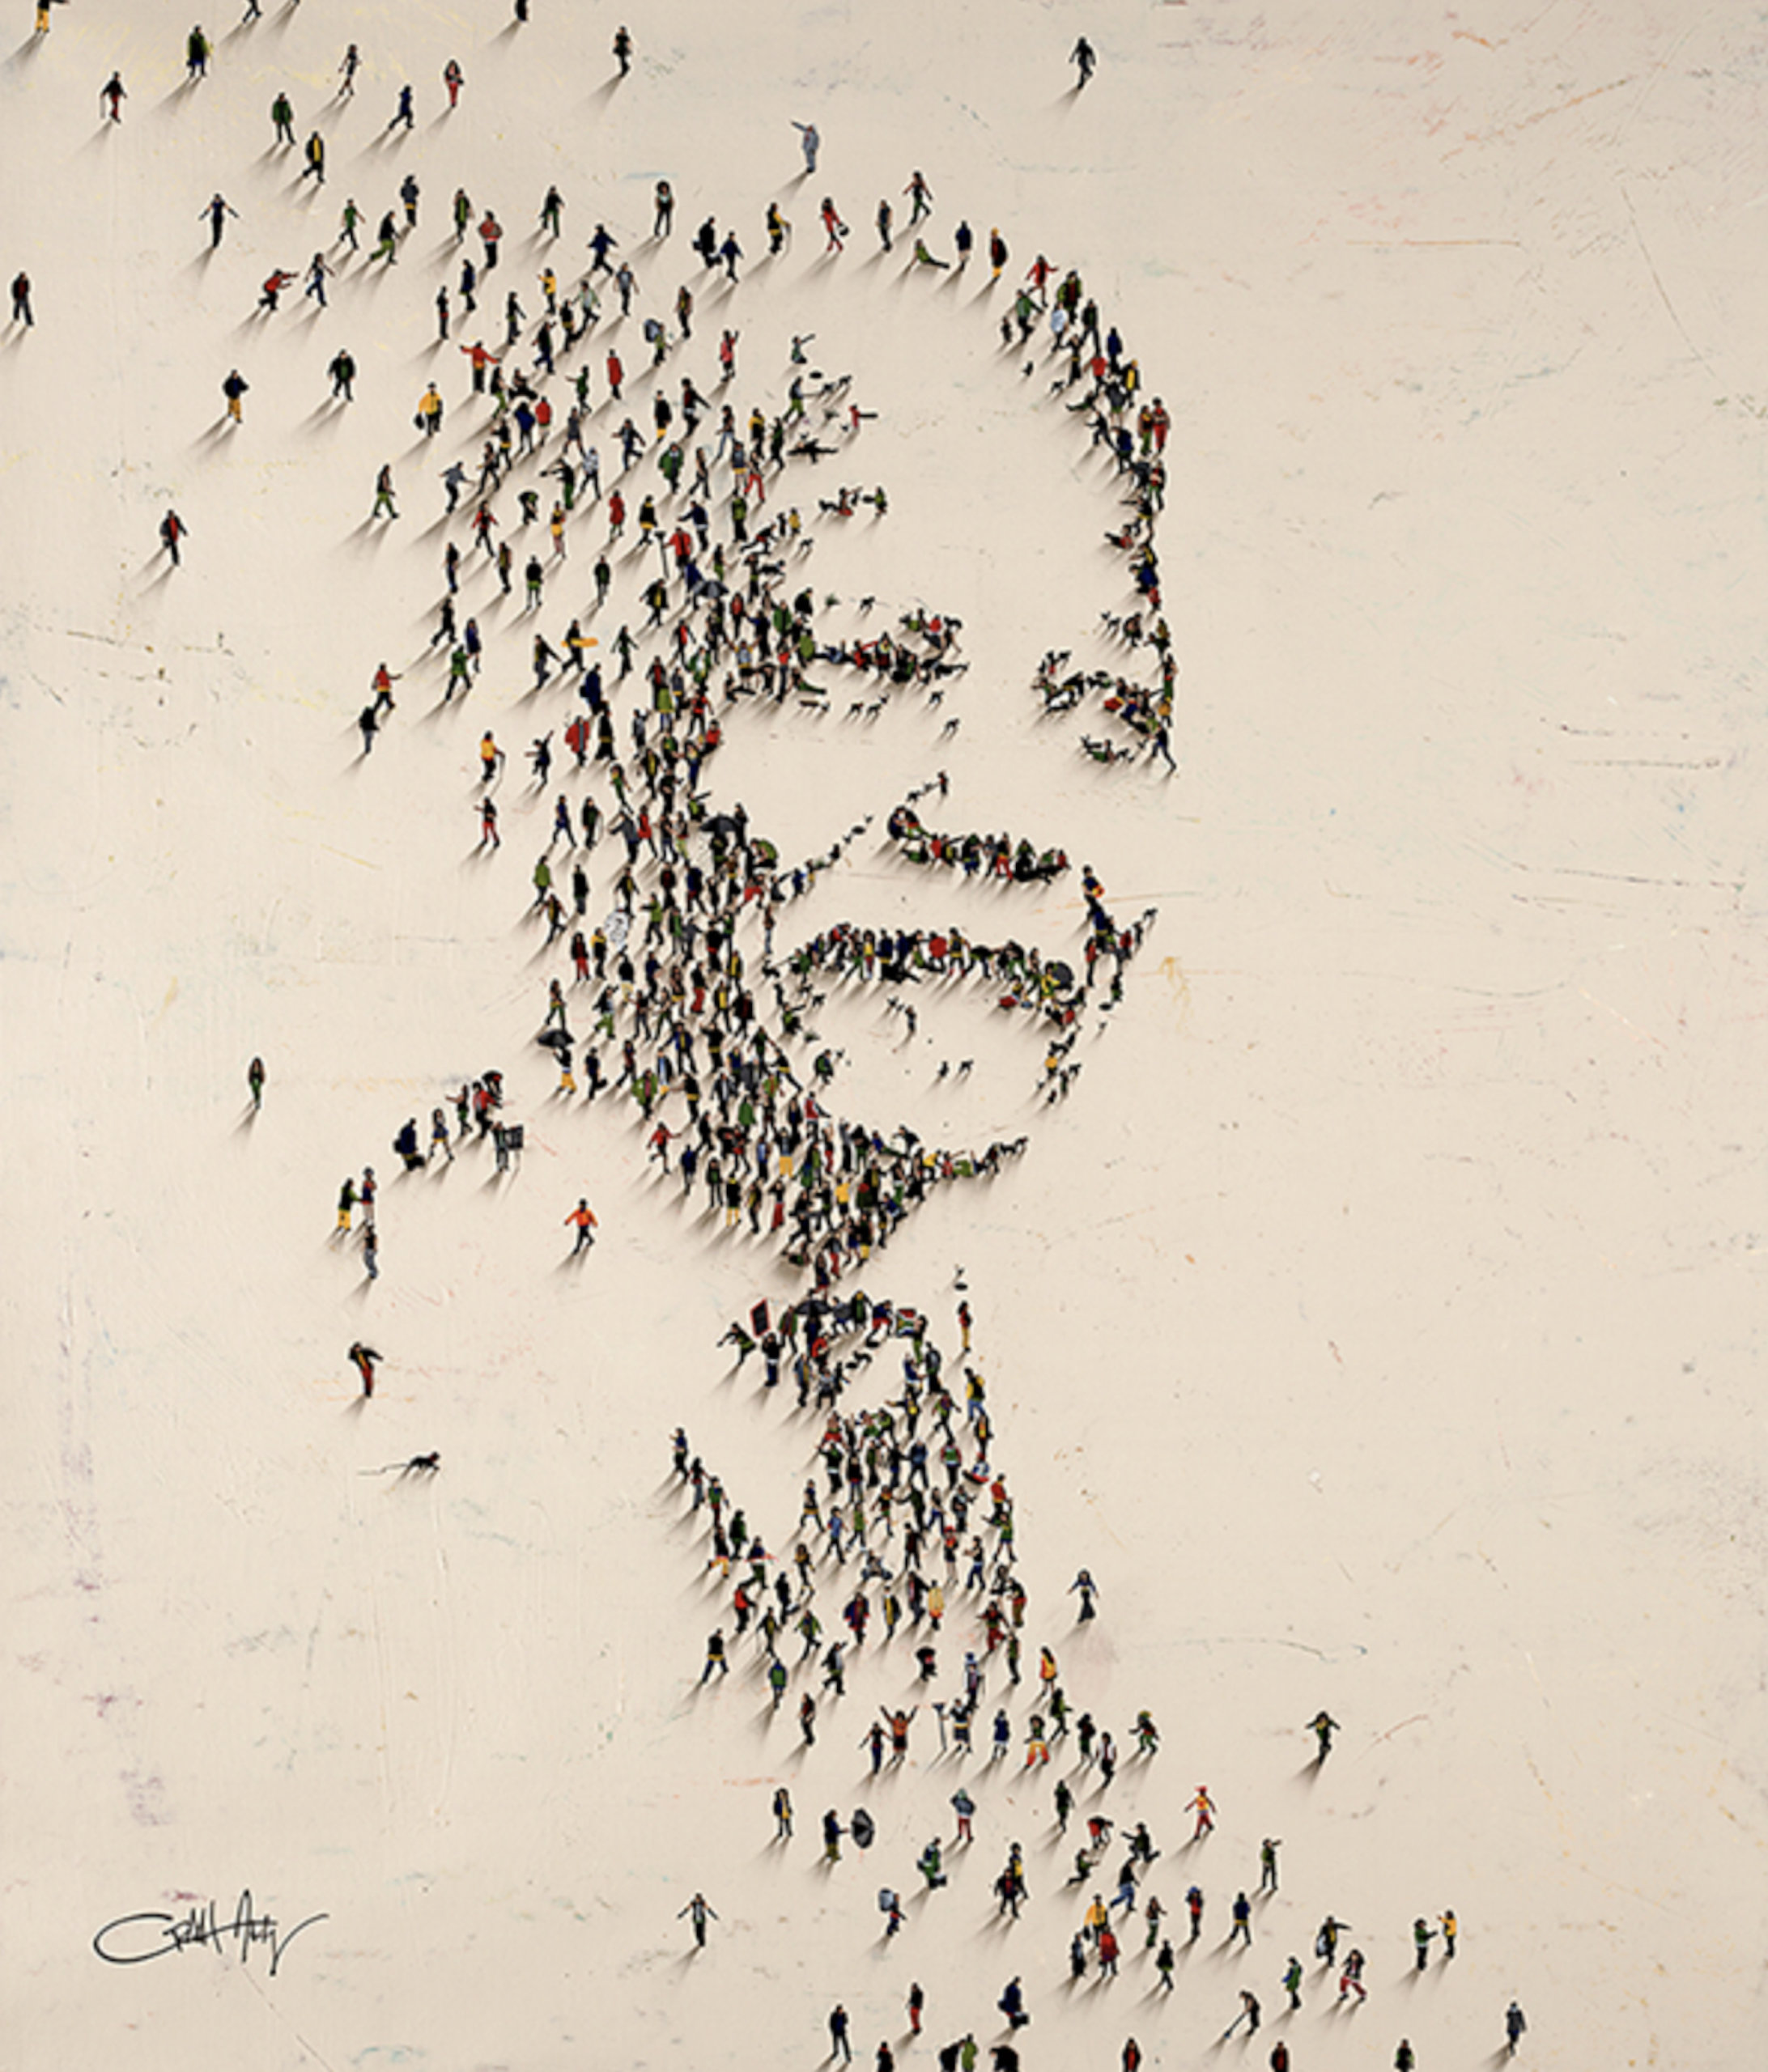 Craig Alan's viral "Populus Nelson Mandela"